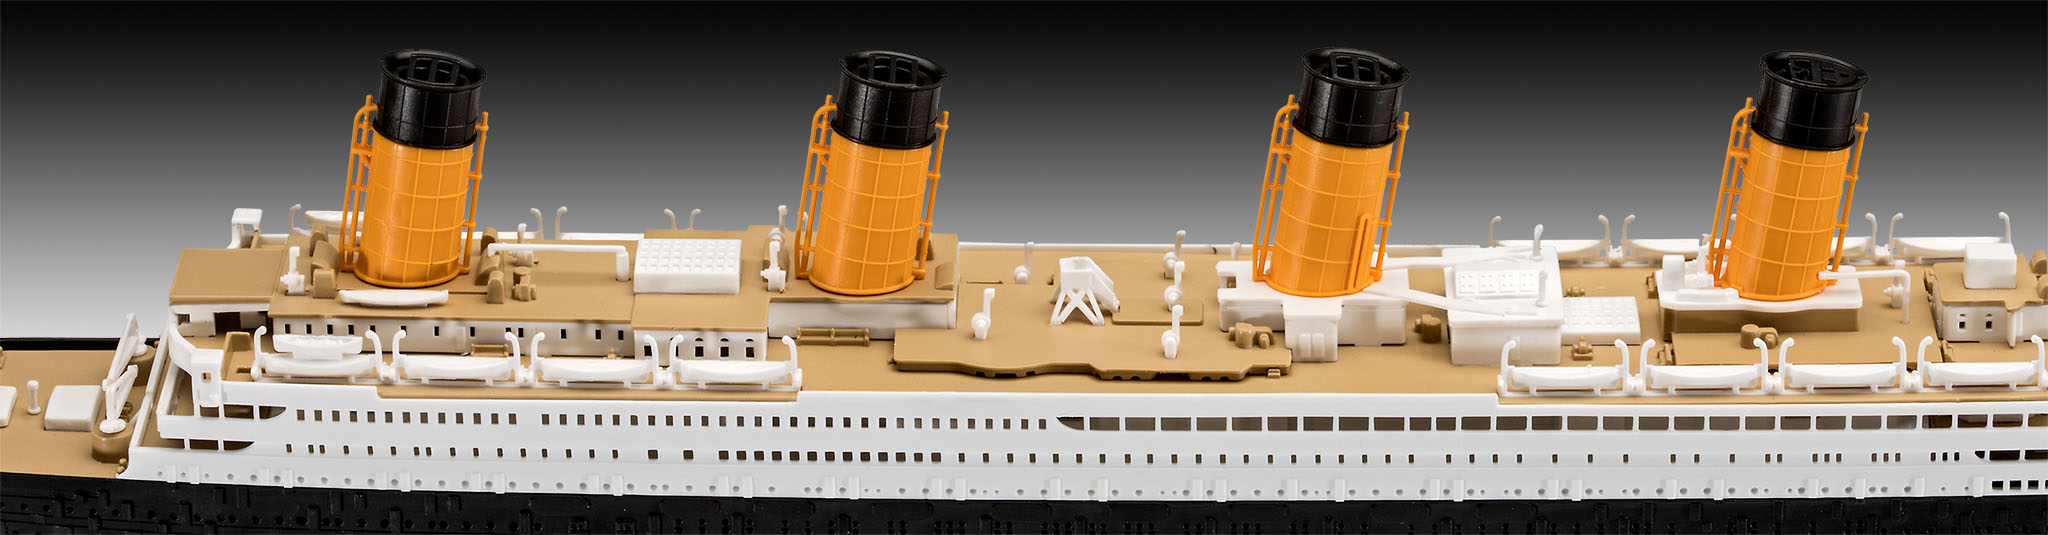 Сборная модель Revell  корабля RMS TITANIC в масштабе 1:600. # 3 hobbyplus.ru